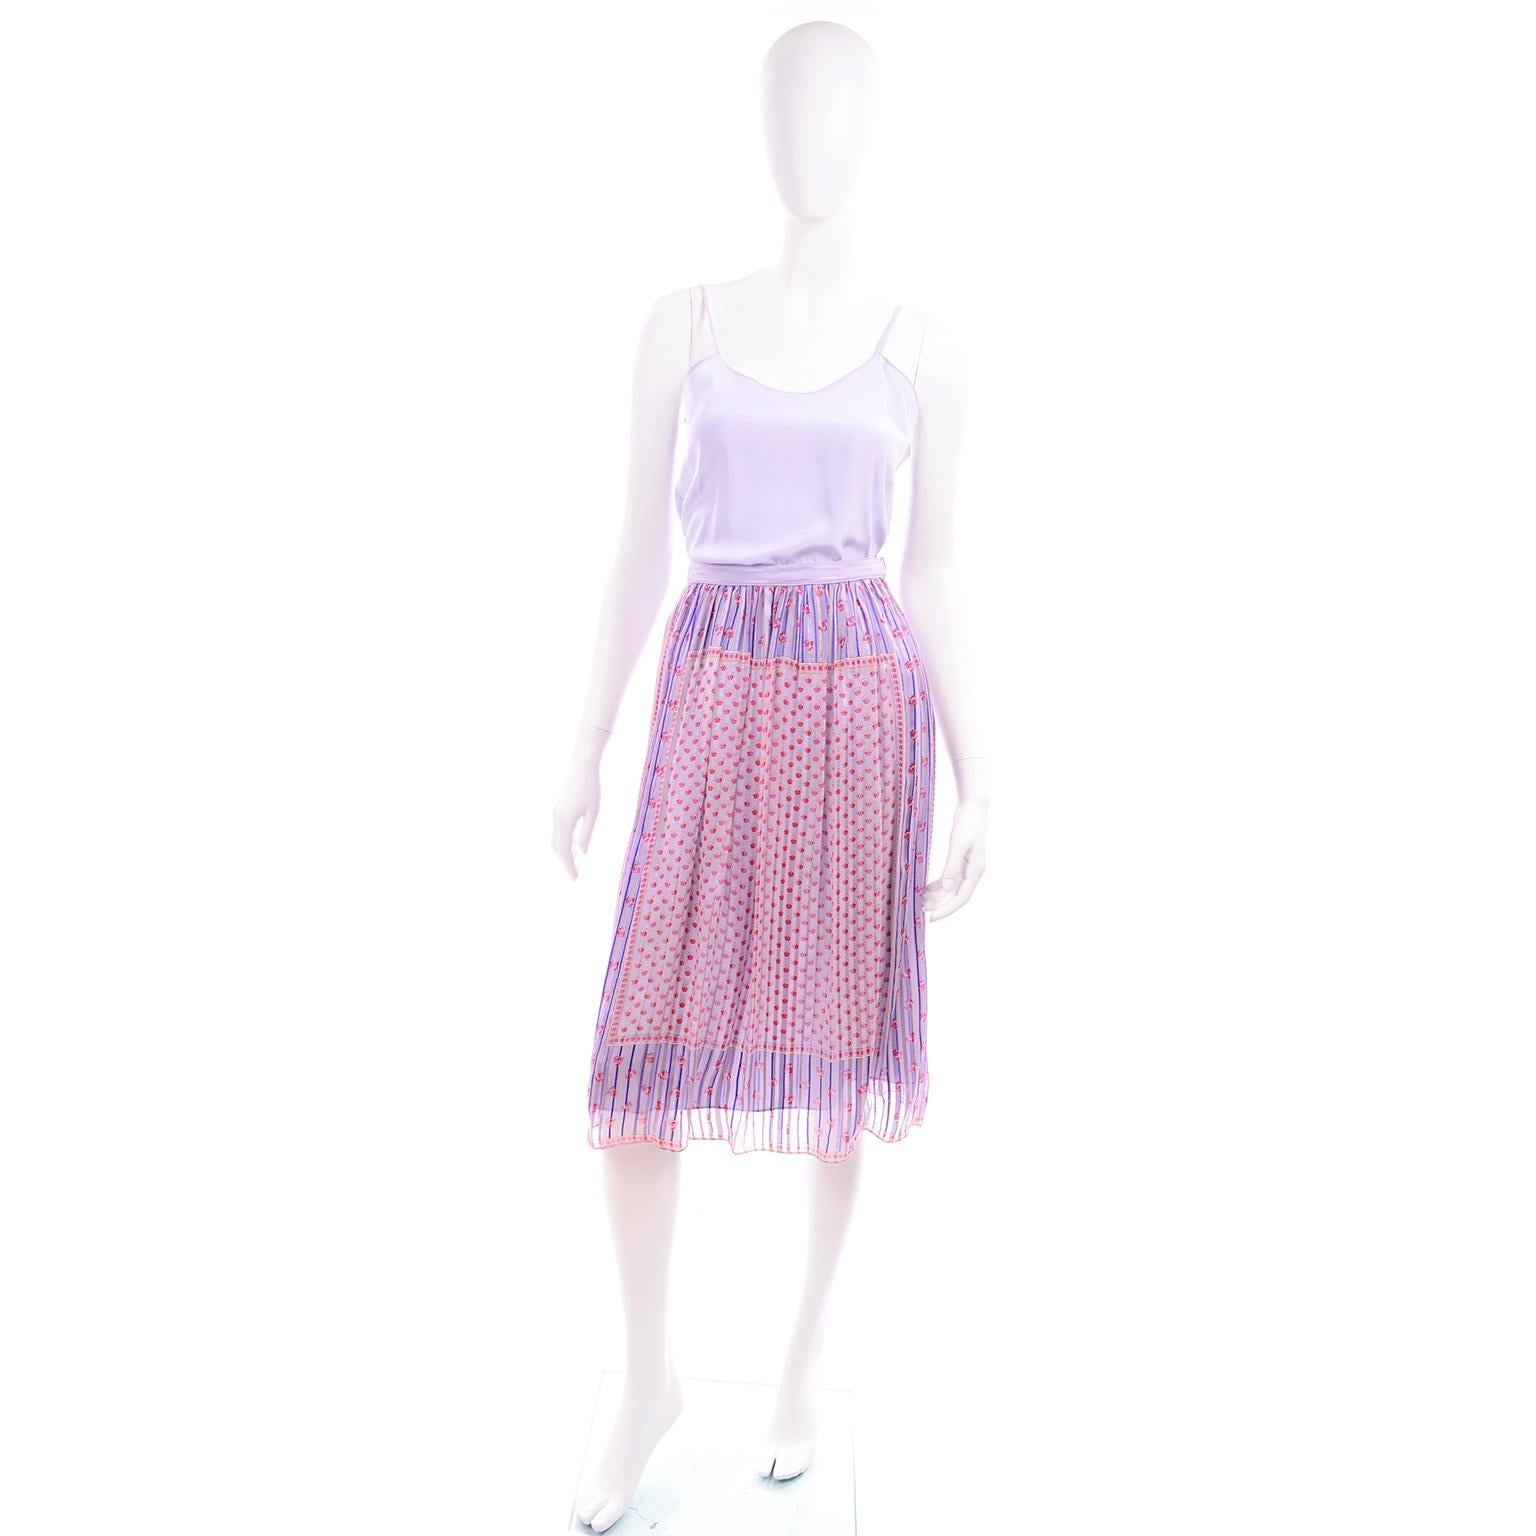 Designer Silk Chiffon 2 Pc Dress in Purple Yellow Pink Floral Print Pattern Mix 3